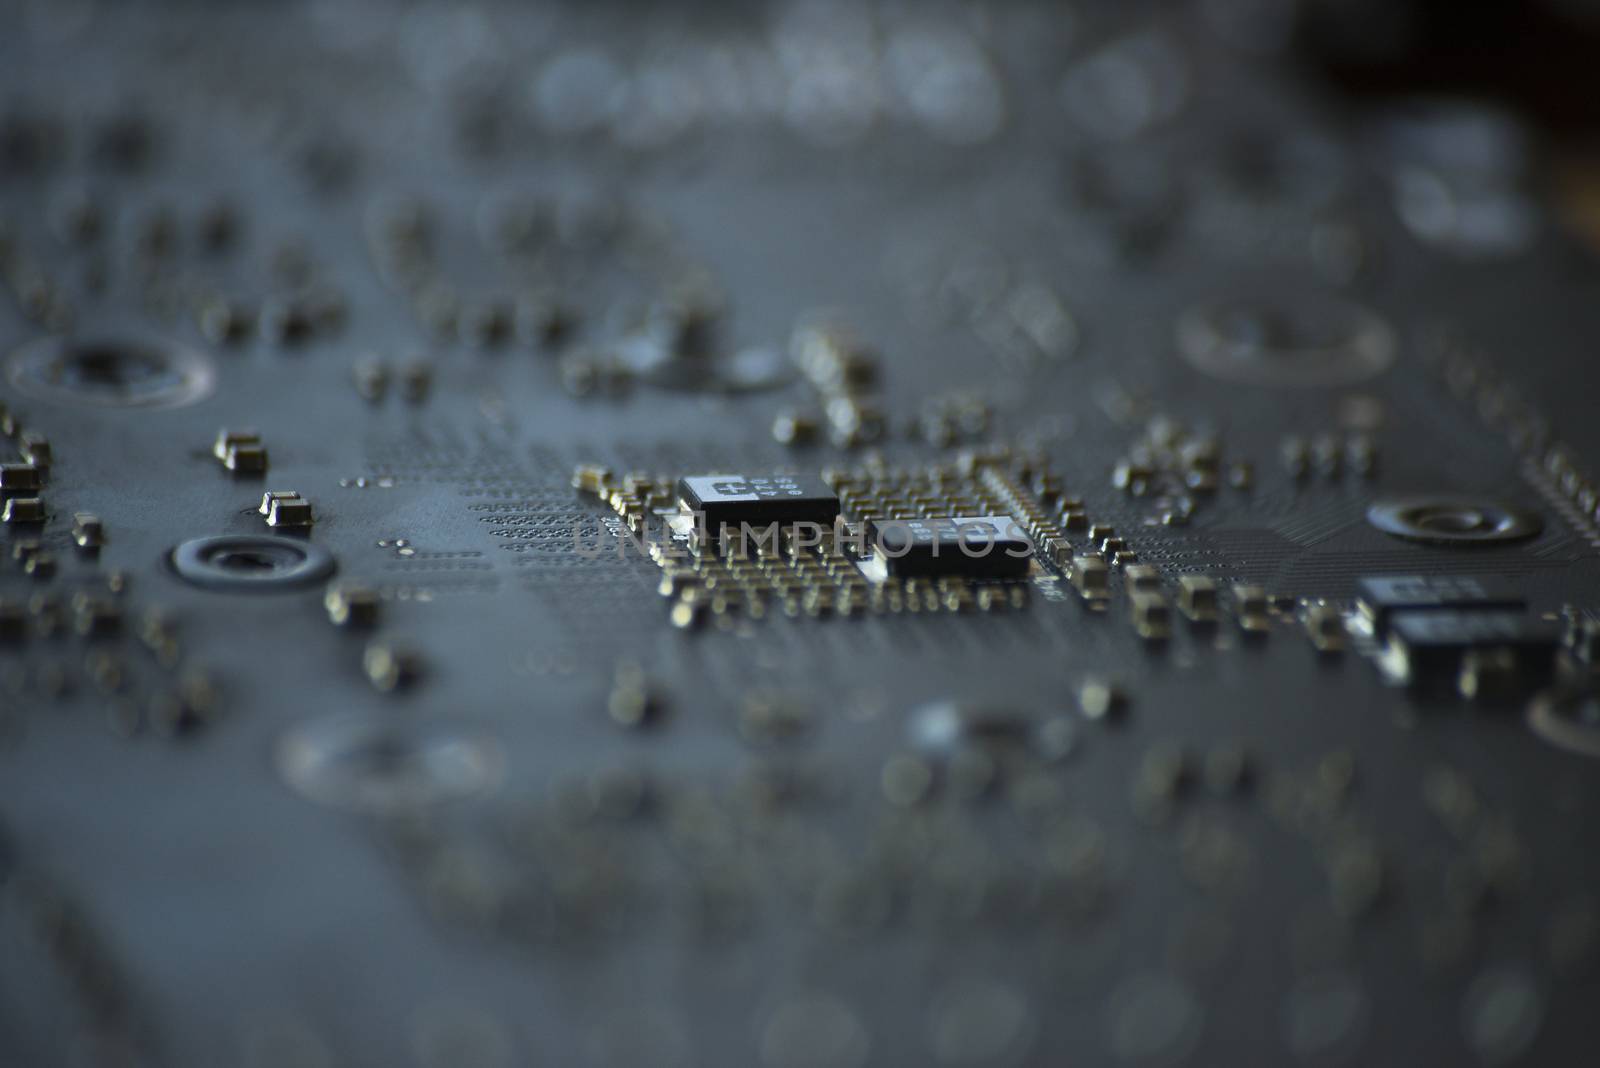 Horizontal shot of an electronic micro circuit